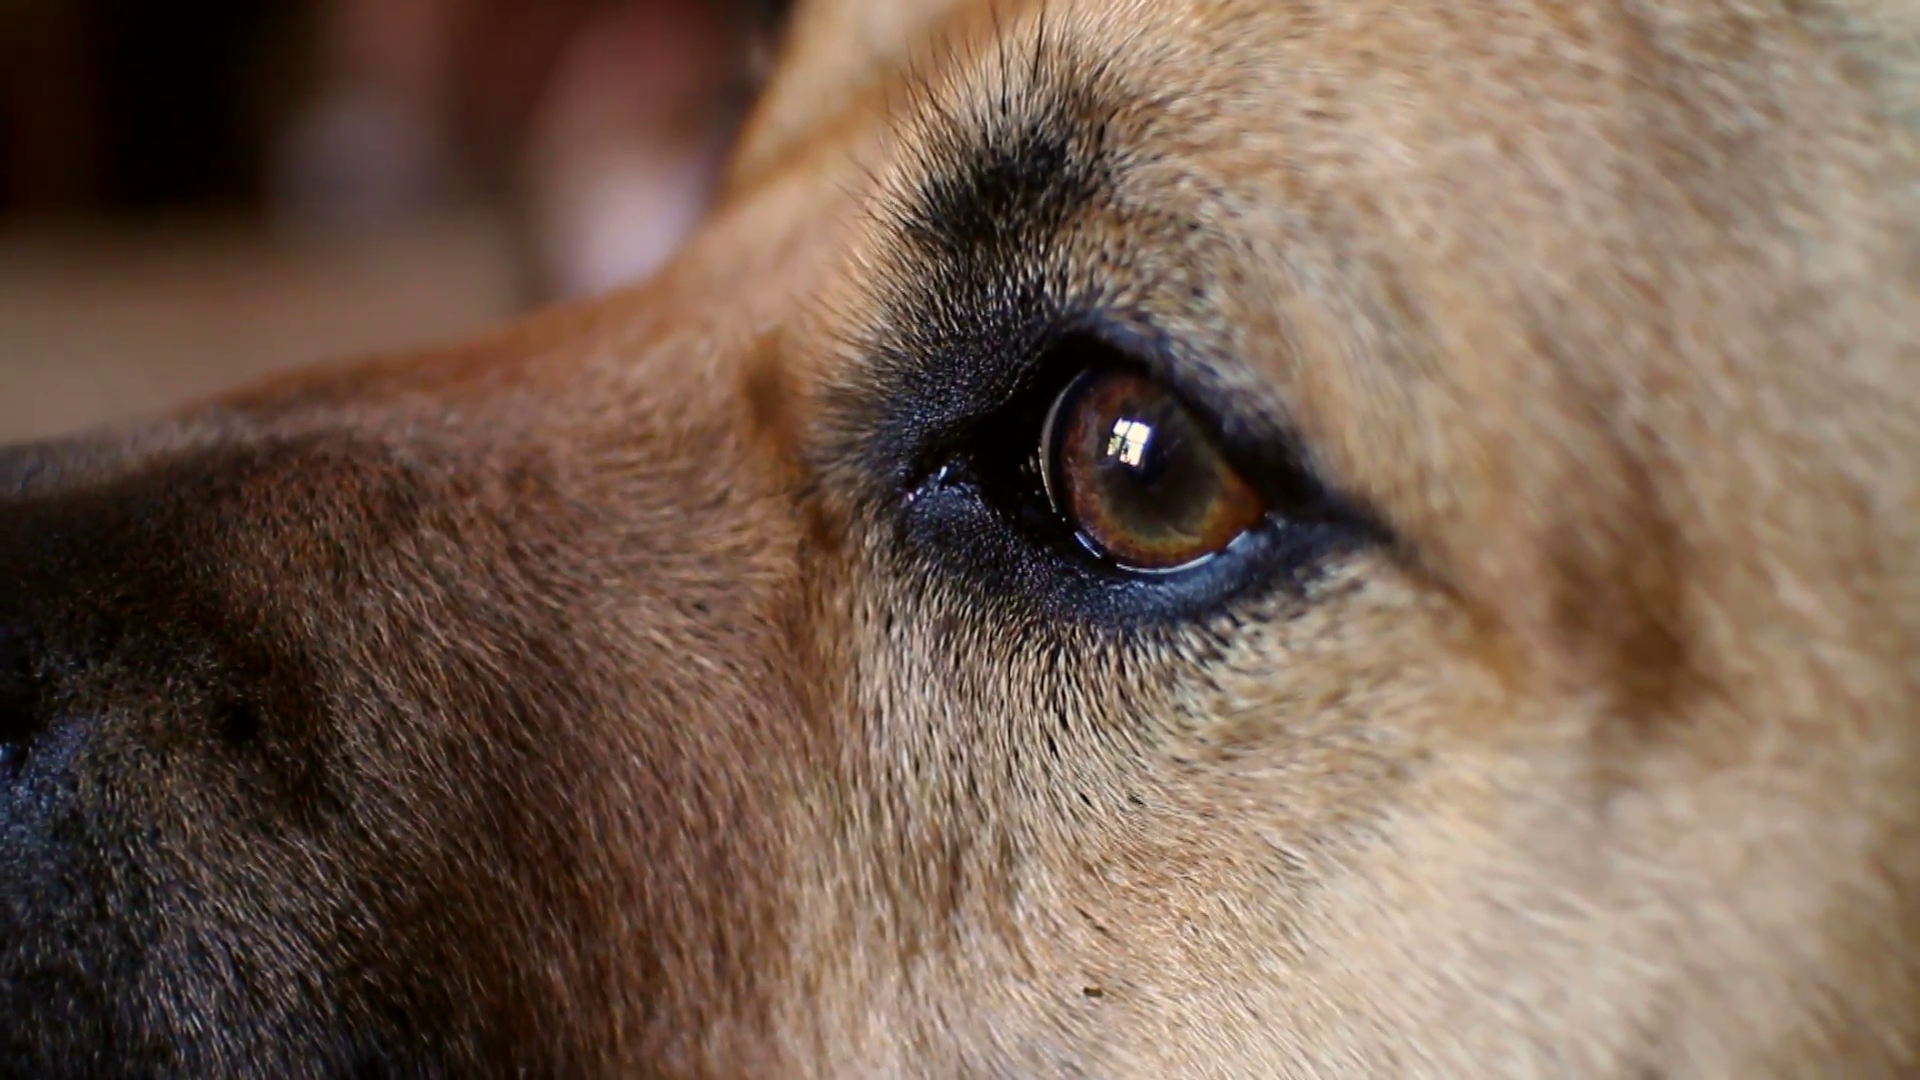 Dogs Eye Close Up Stock Video Footage - Videoblocks